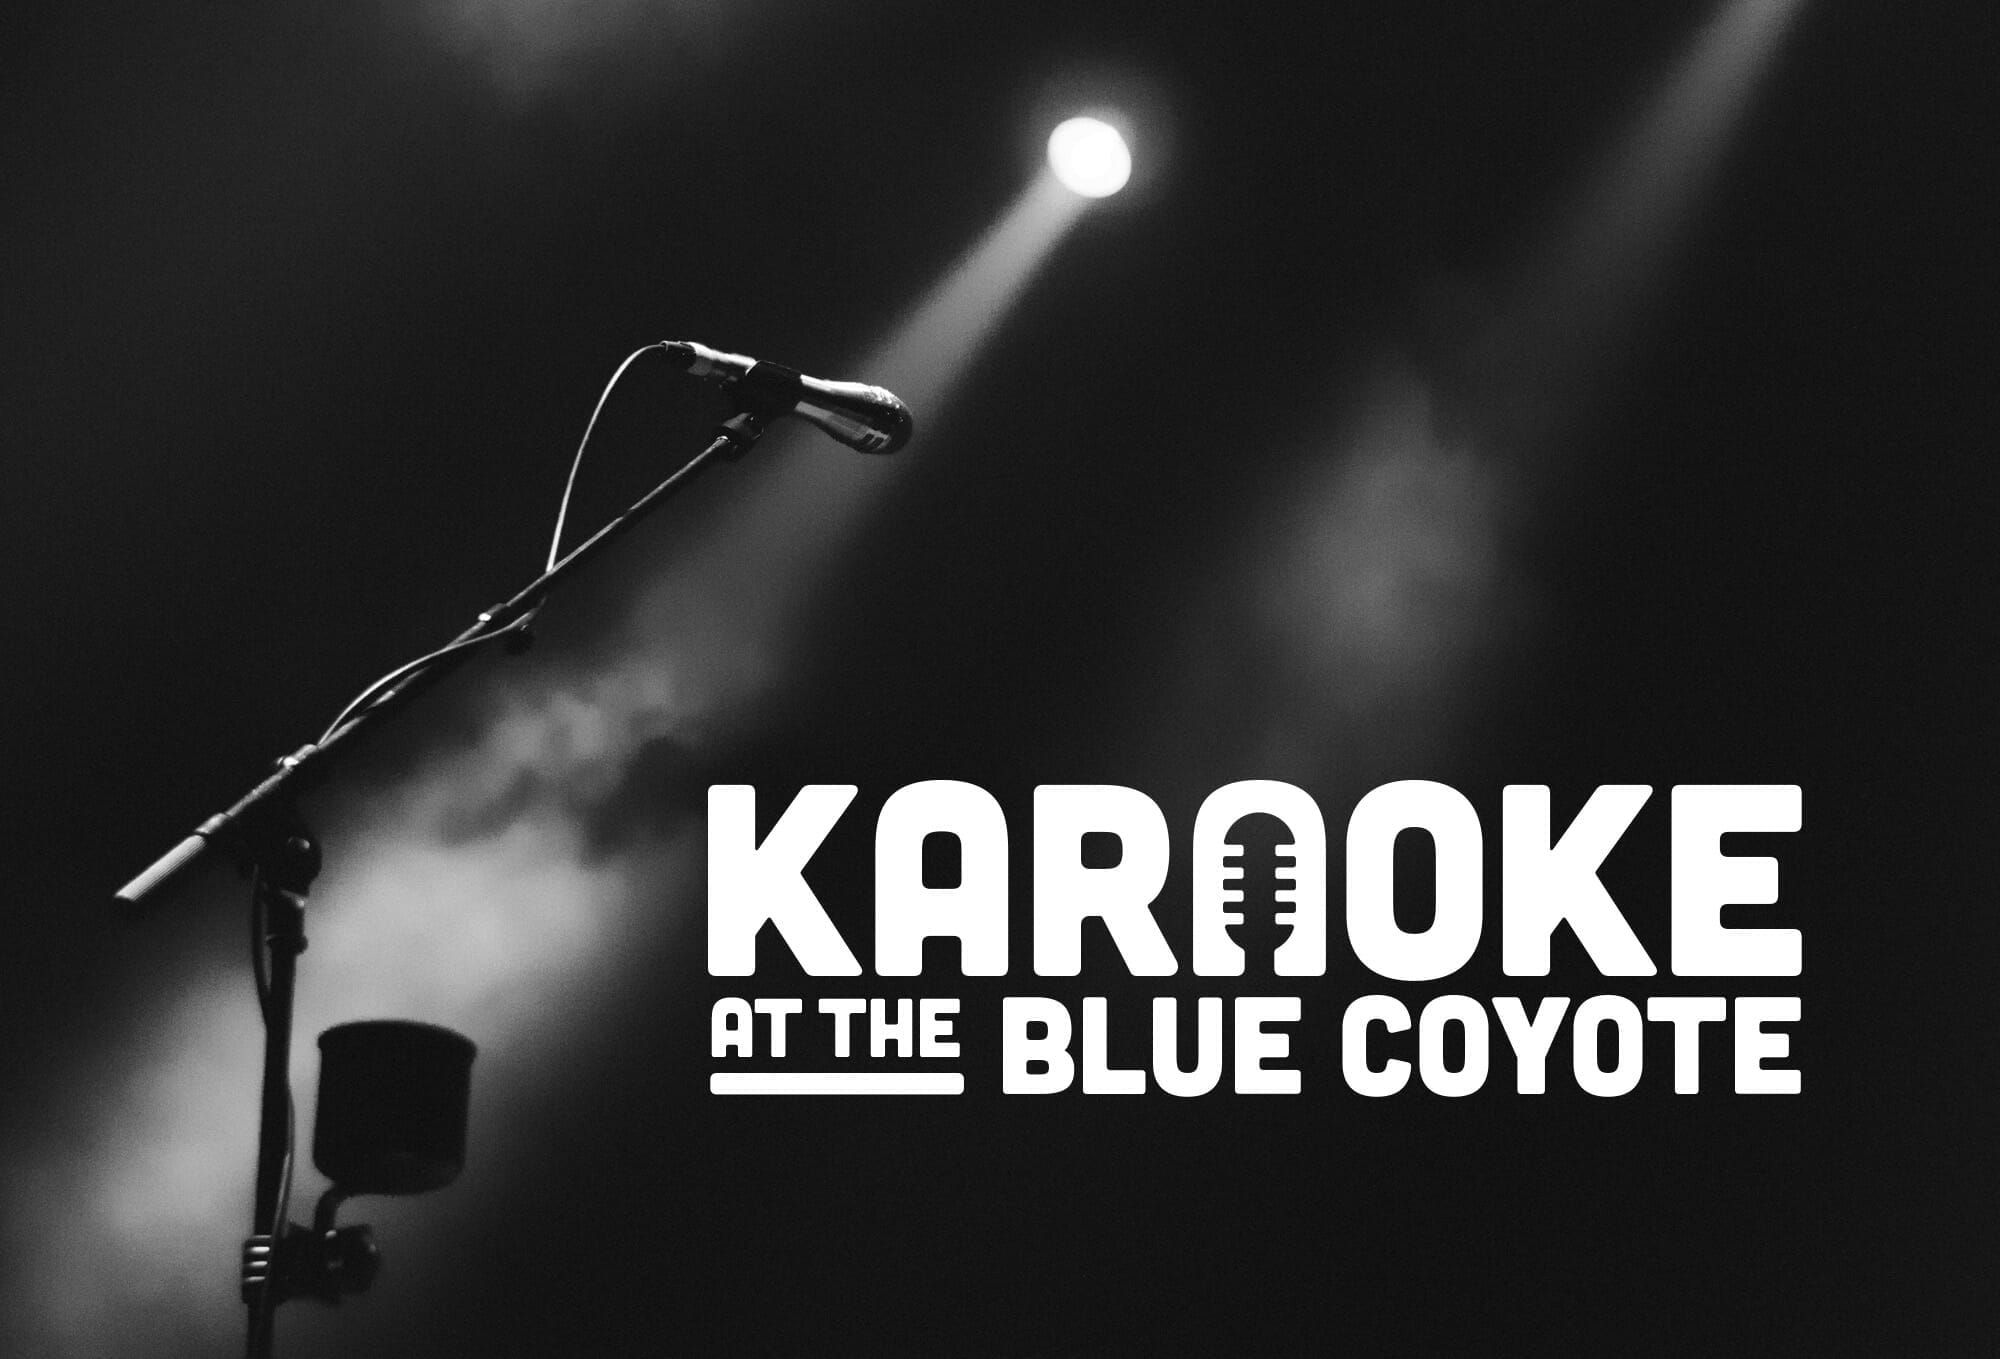  Karaoke at the Blue Coyote Logo: Final Design